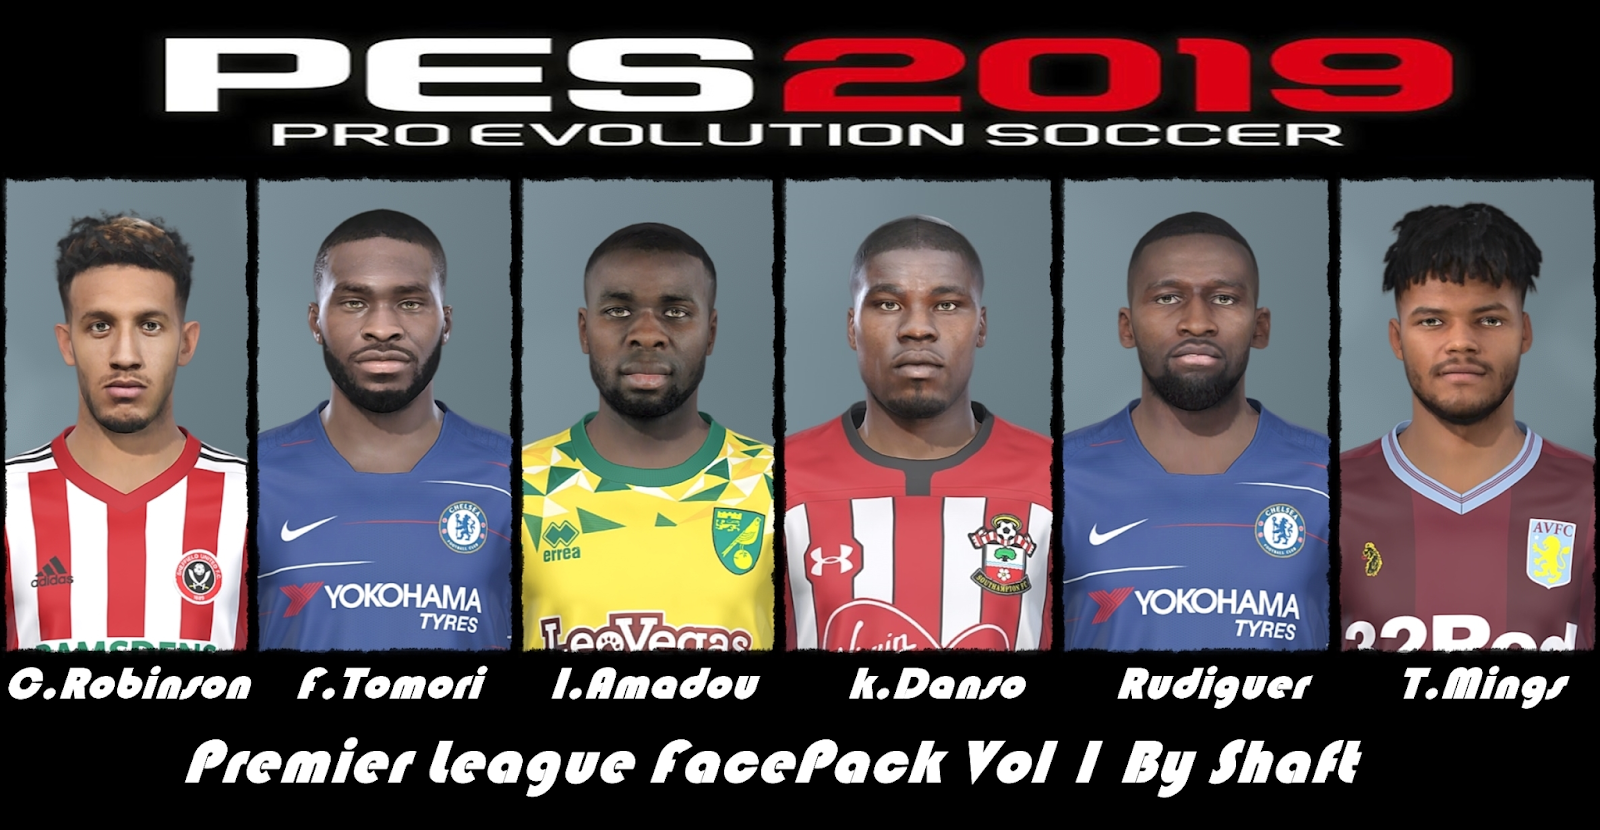 PES 2019 Premier League Facepack Vol 1 by Shaft ~ SoccerFandom.com | PES Patch and FIFA Updates